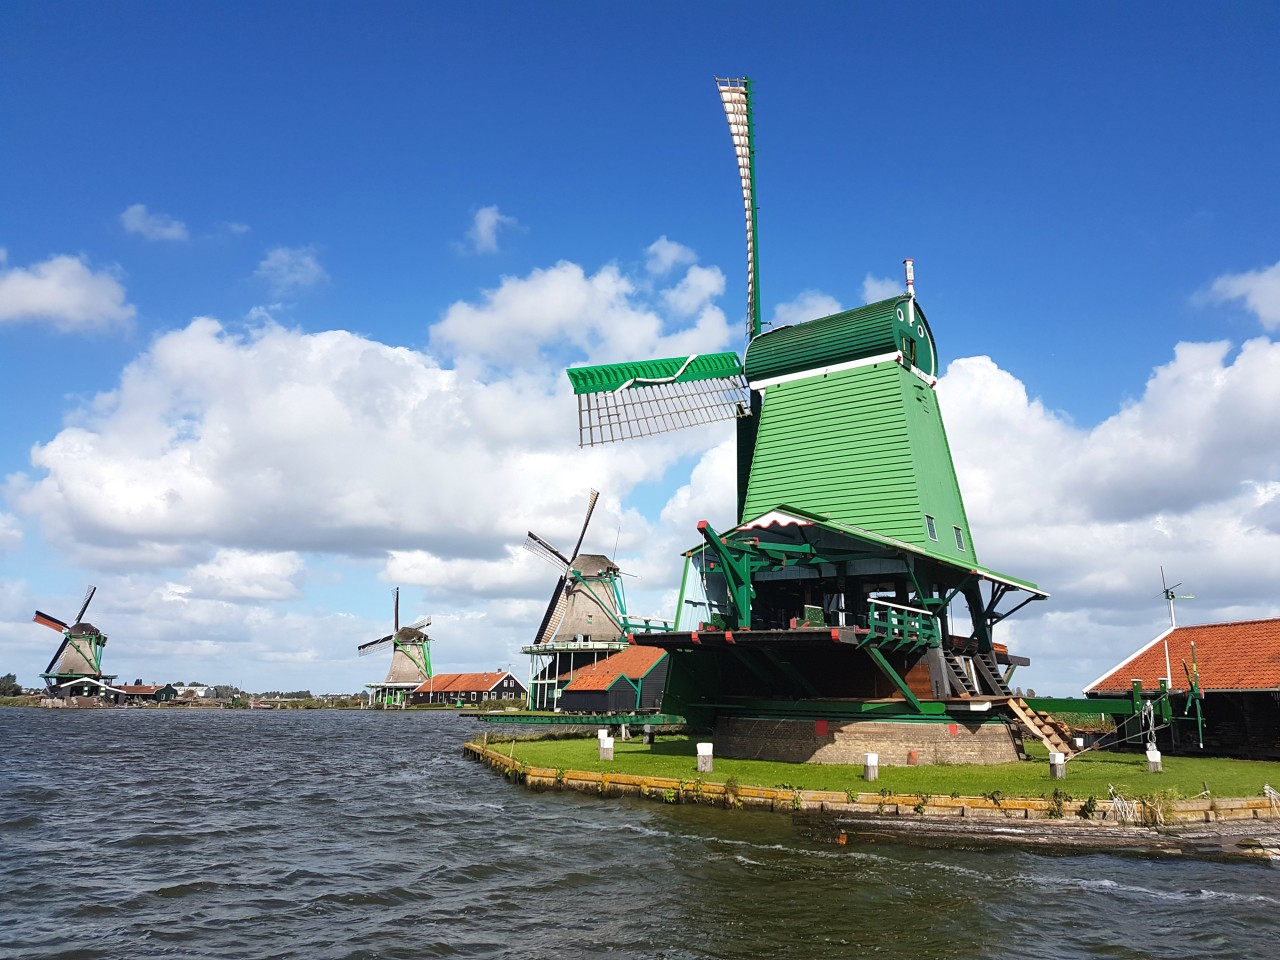 Zaanse Schans is home to the iconic Dutch windmills